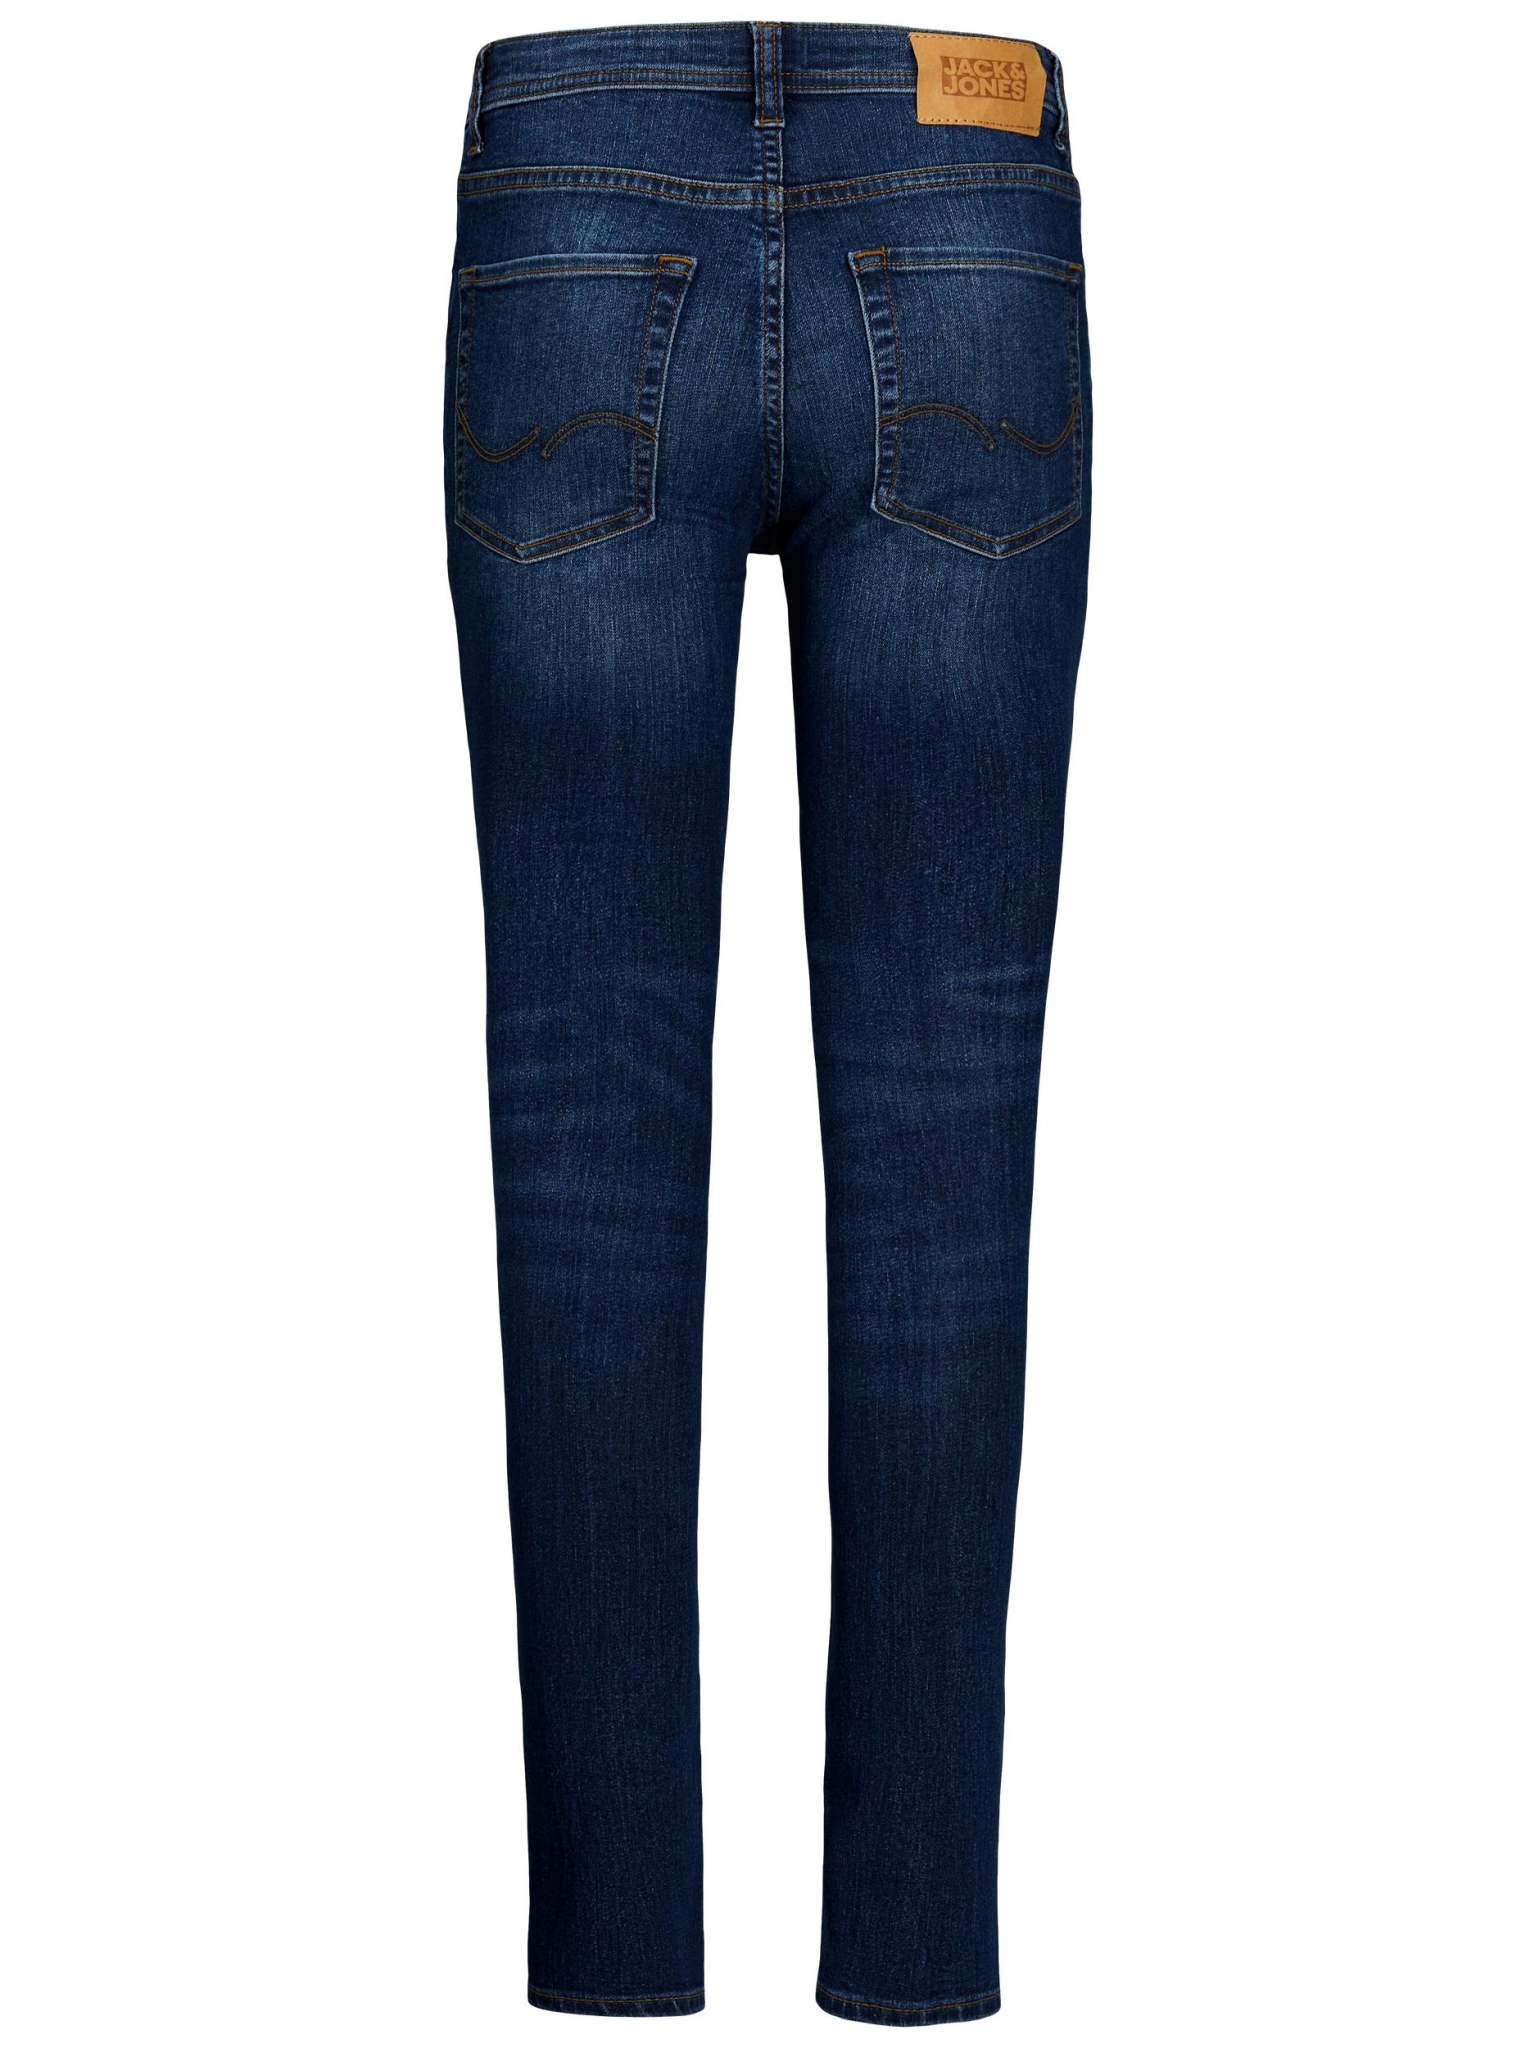 JACK&JONES Skinny Fit Jeans 10603998